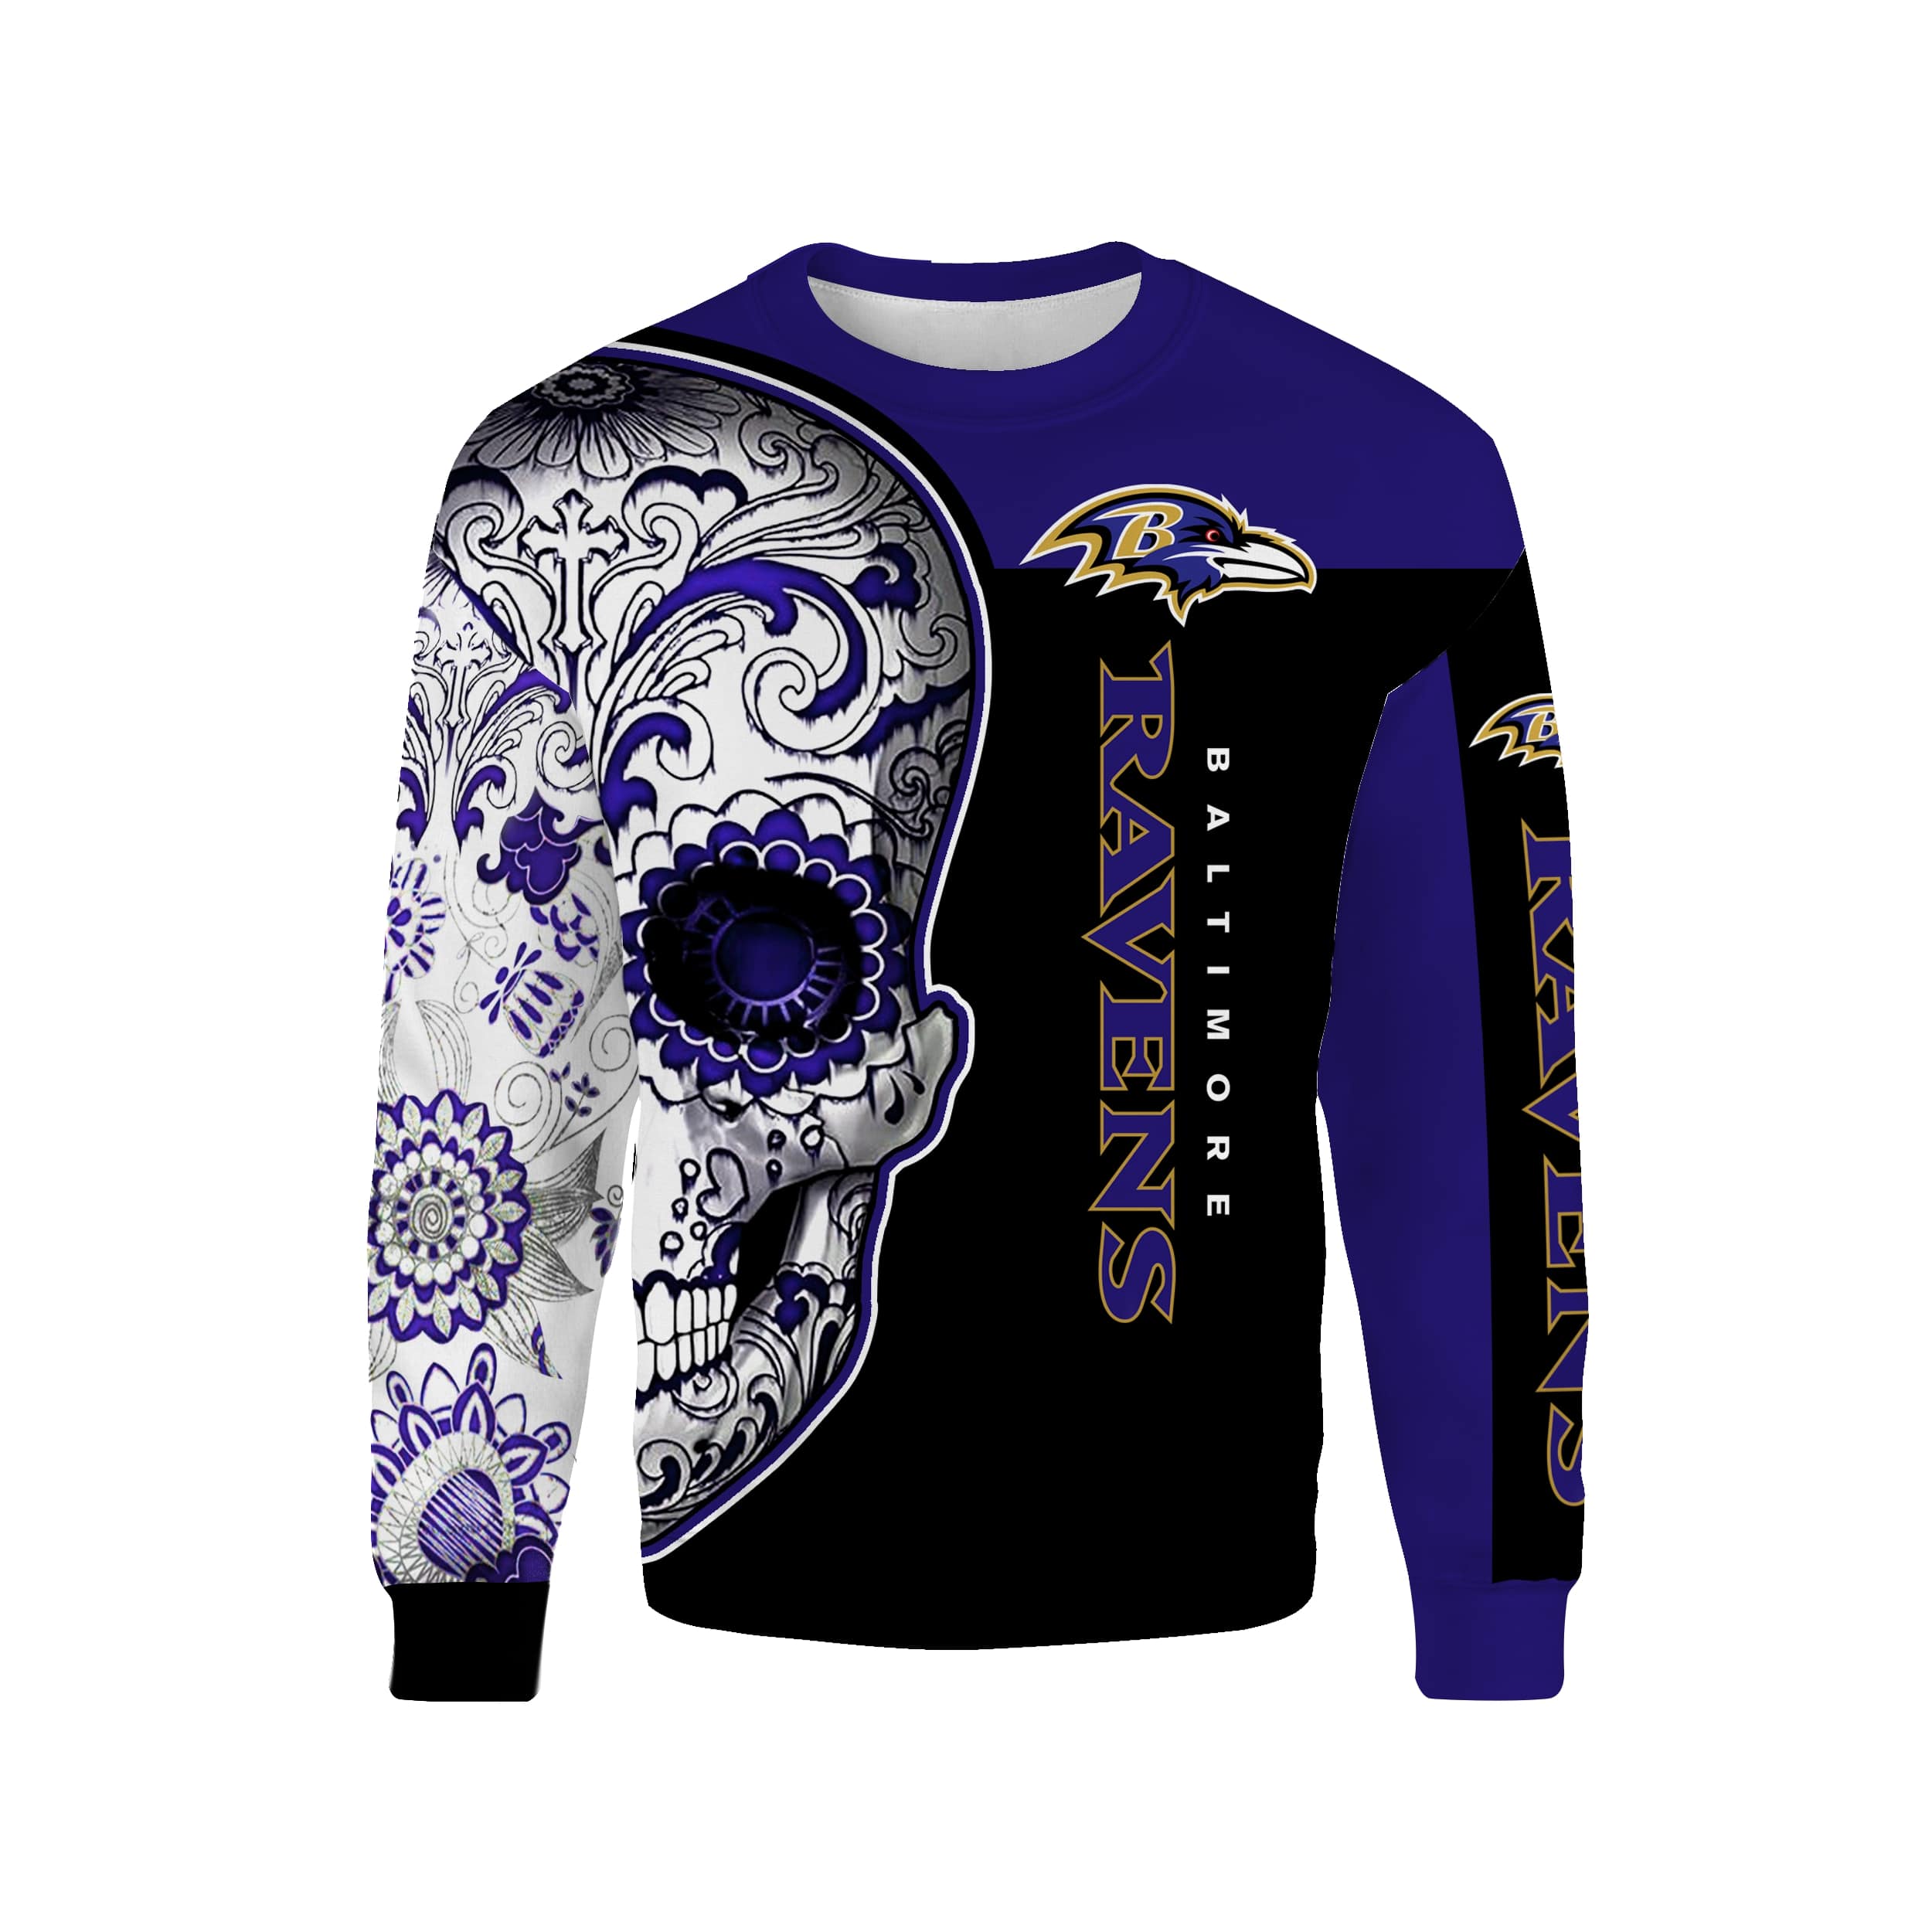 Sugar skull baltimore ravens all over print sweatshirt